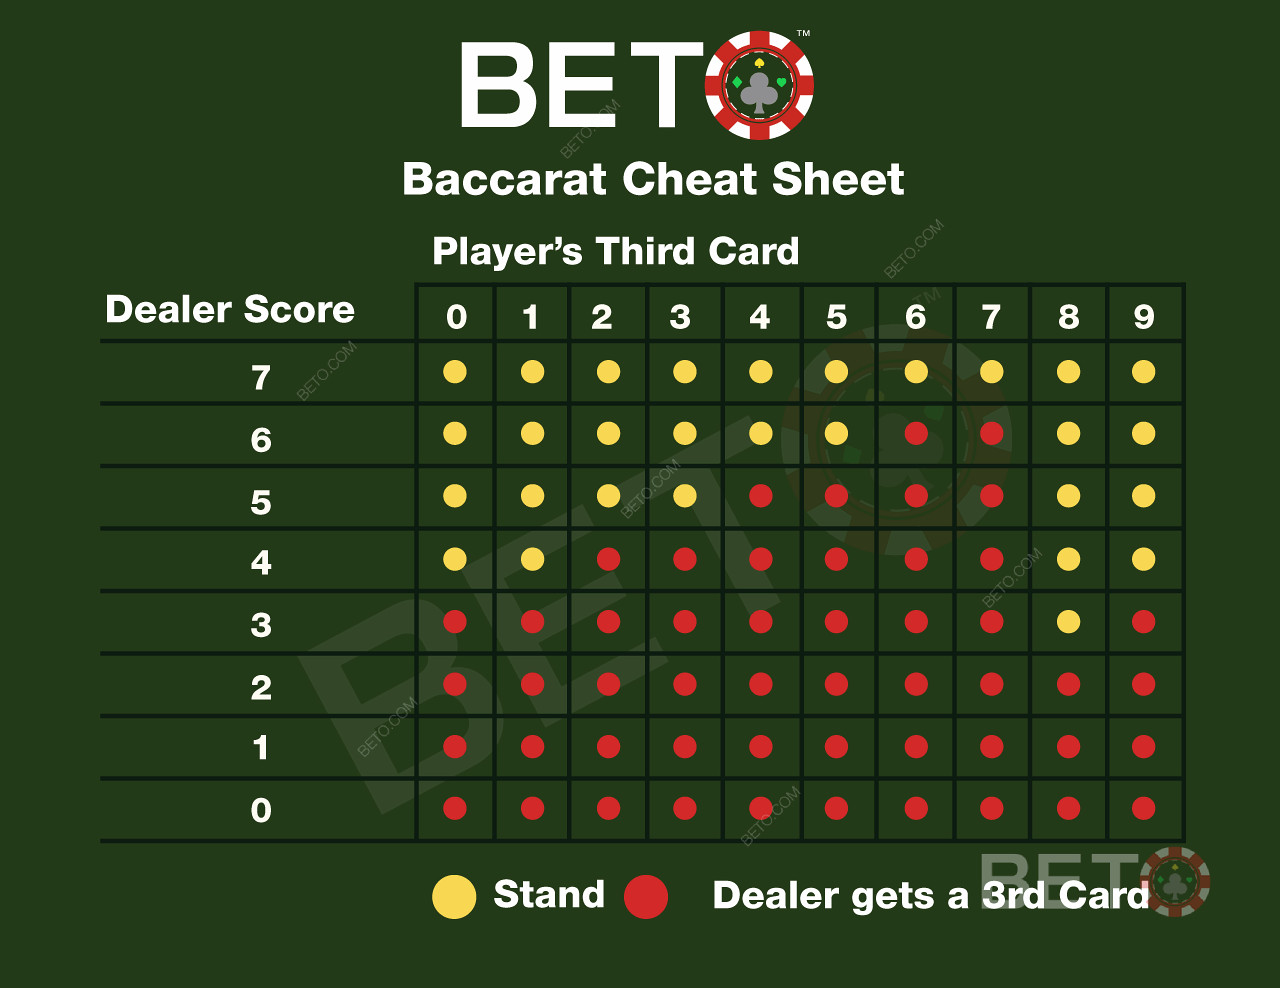 Baccarat cheat sheet a tabuľka pravidiel